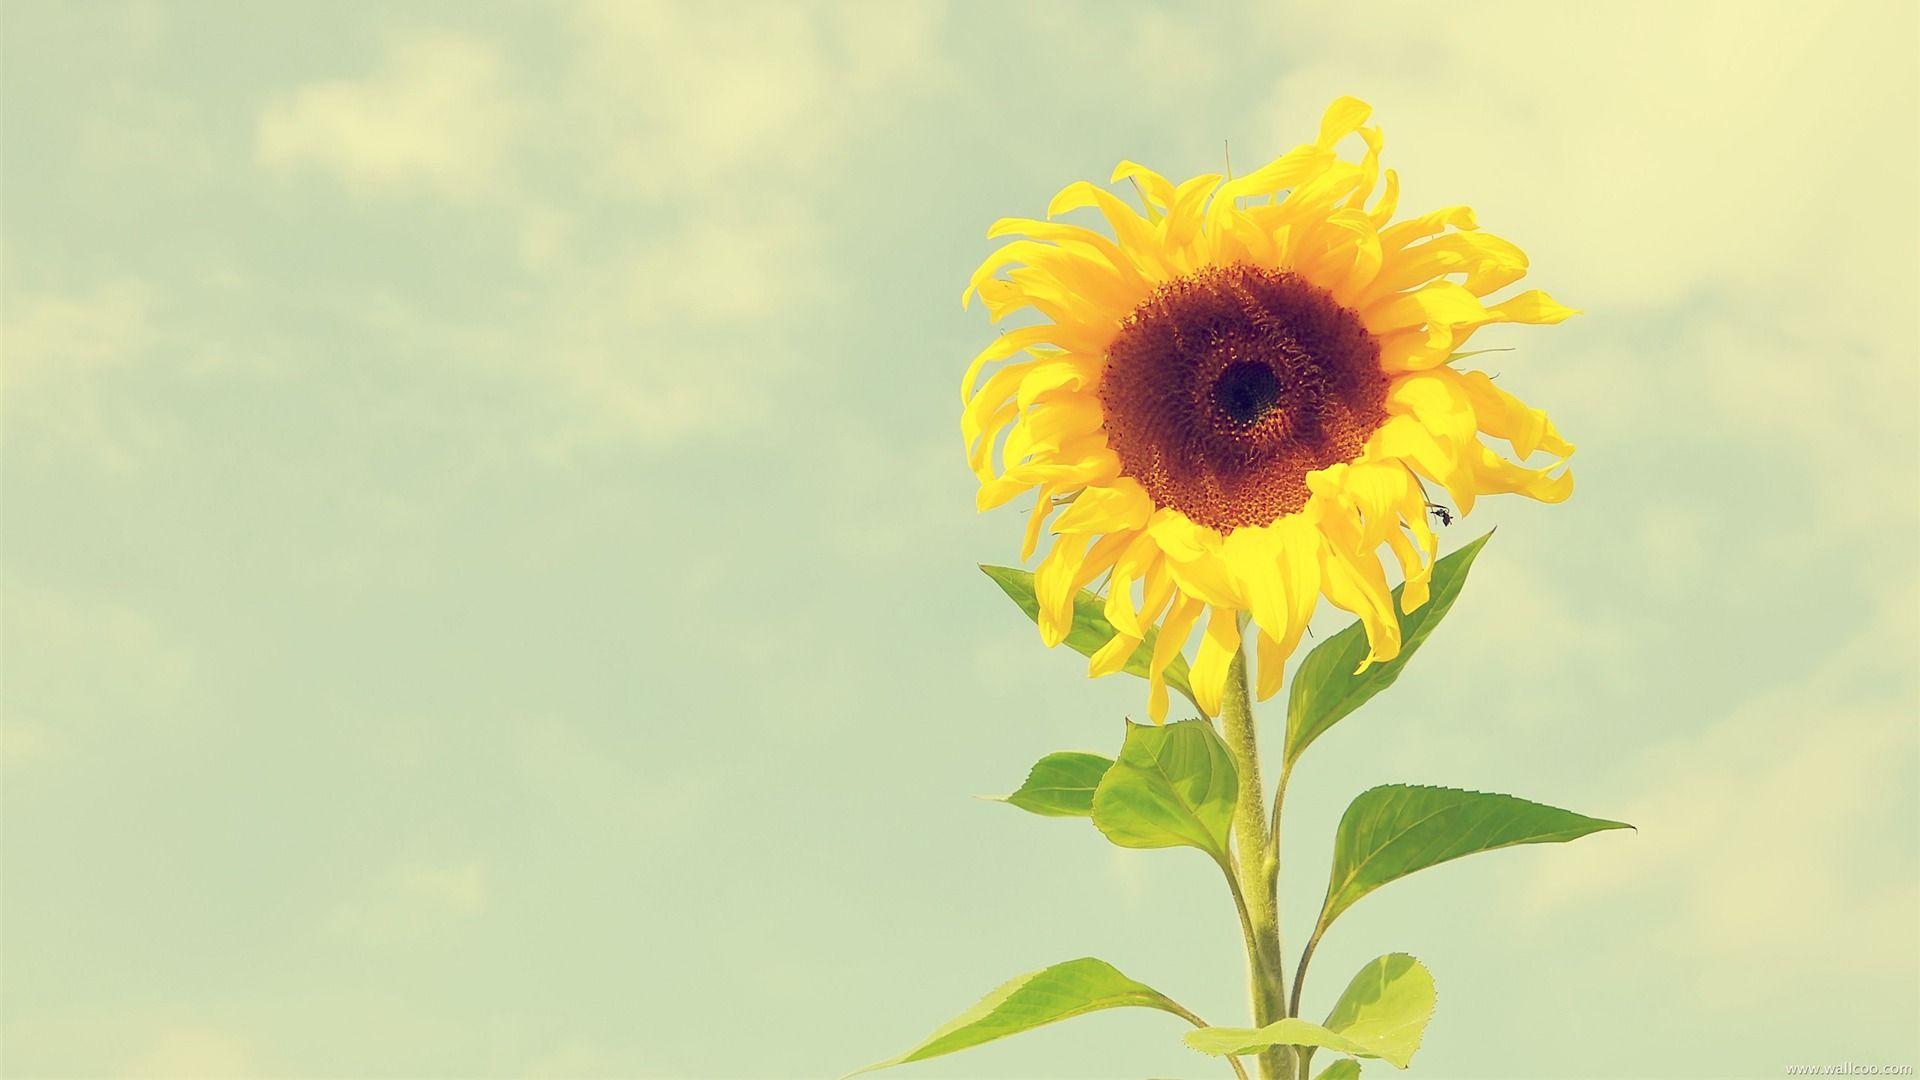 sun in sunflower wallpaper wallpaper download